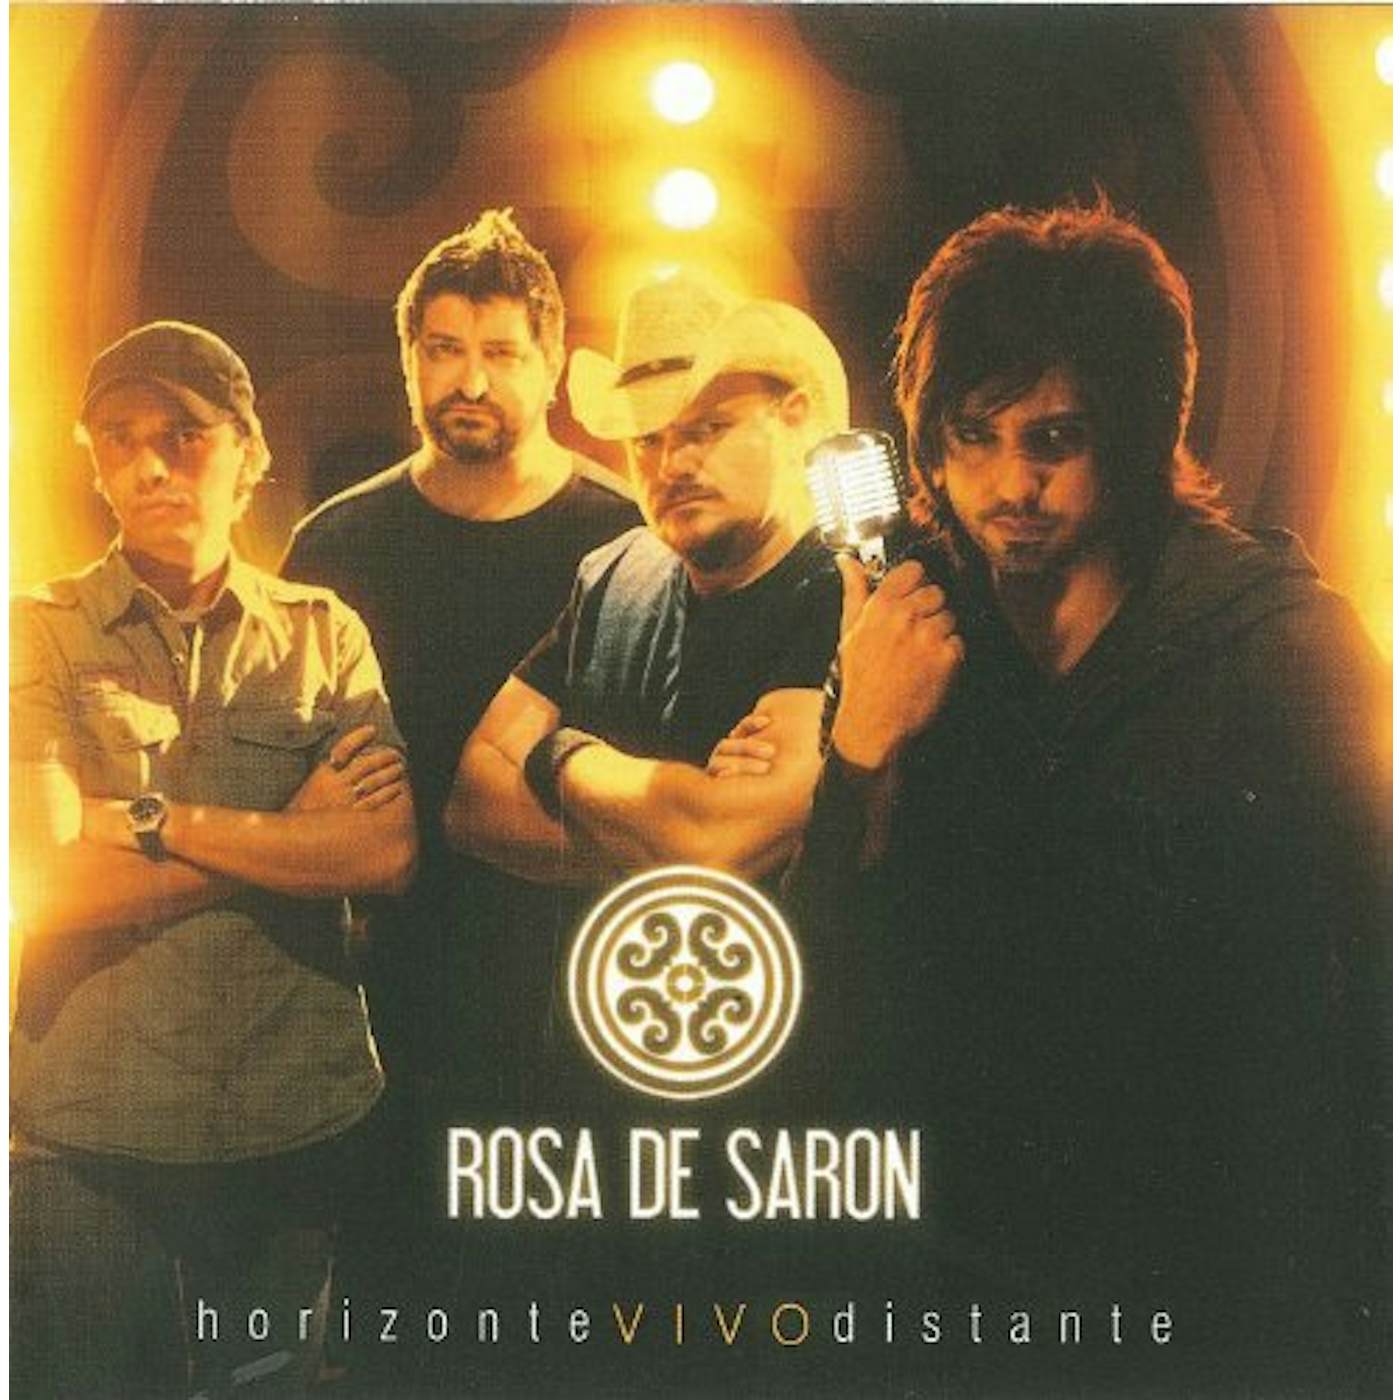 Rosa de Saron HORIZONTE VIVO DISTANTE CD